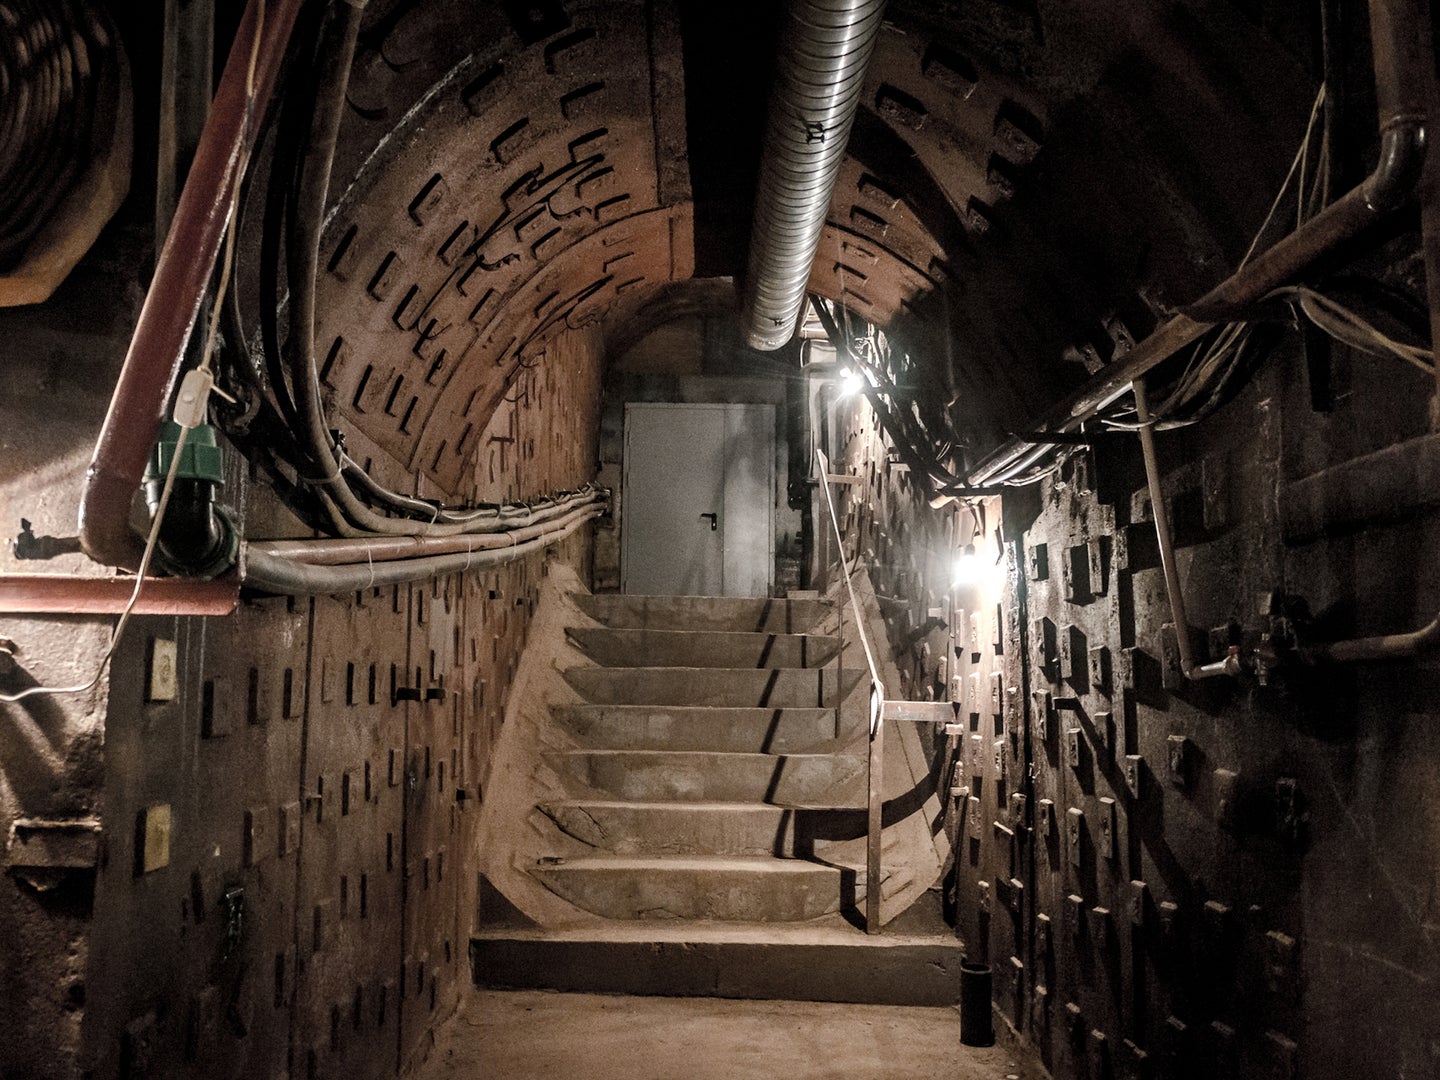 Underground doomsday bunker entrance